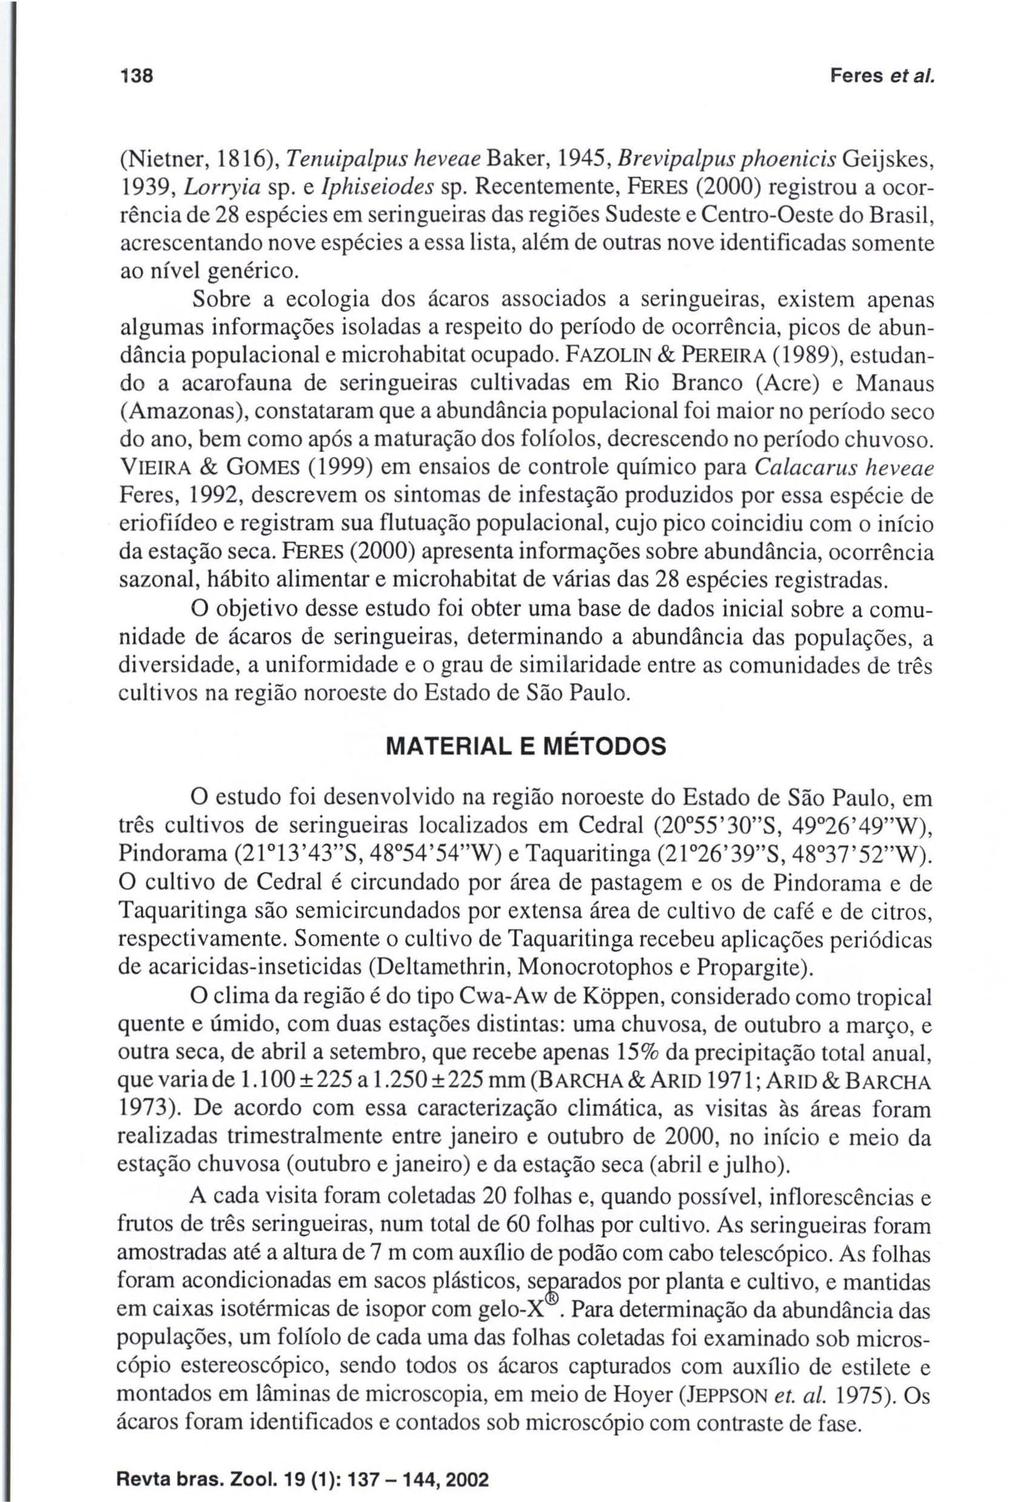 138 Feres et al. (Nietner, 1816), Tenuipalpus heveae Baker, 1945, Brevipalpus phoenicis Geijskes, 1939, Lorryia sp. e lphiseiodes sp.